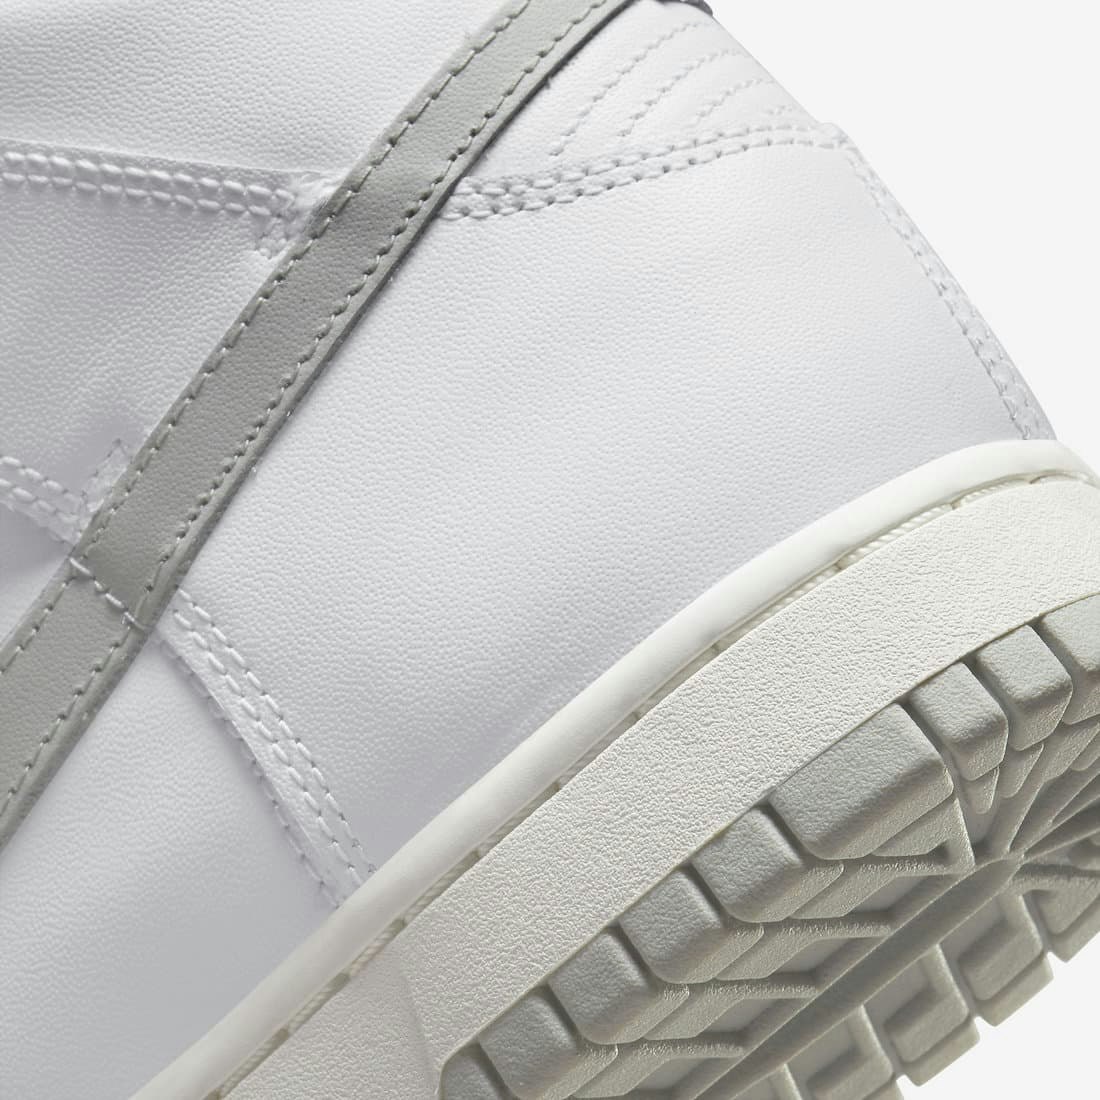 Nike Dunk High "Neutral Grey"